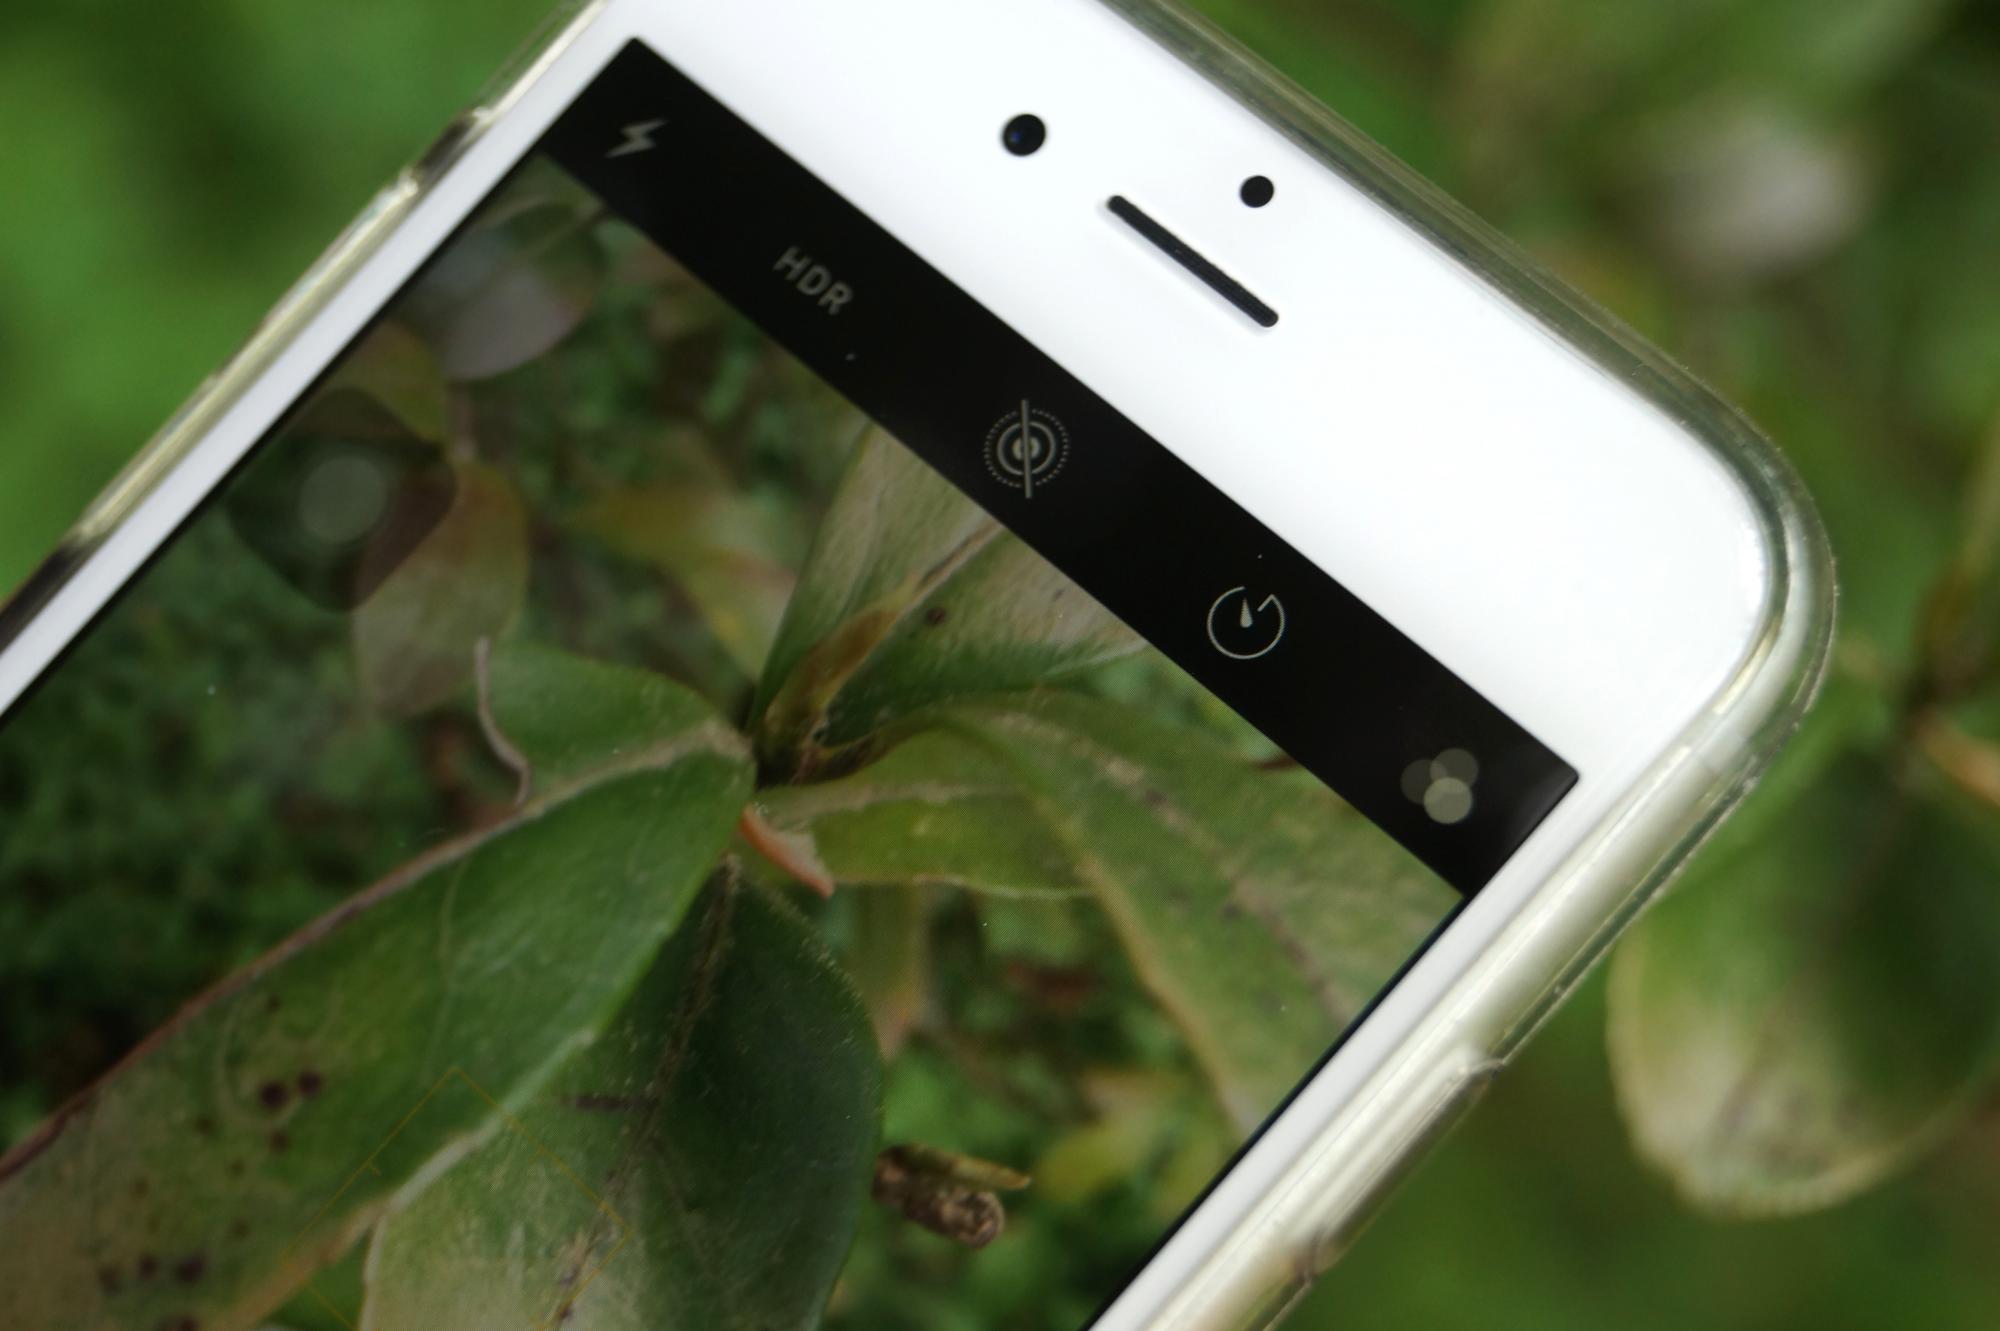 Phone camera screen focused on green leaf plant 